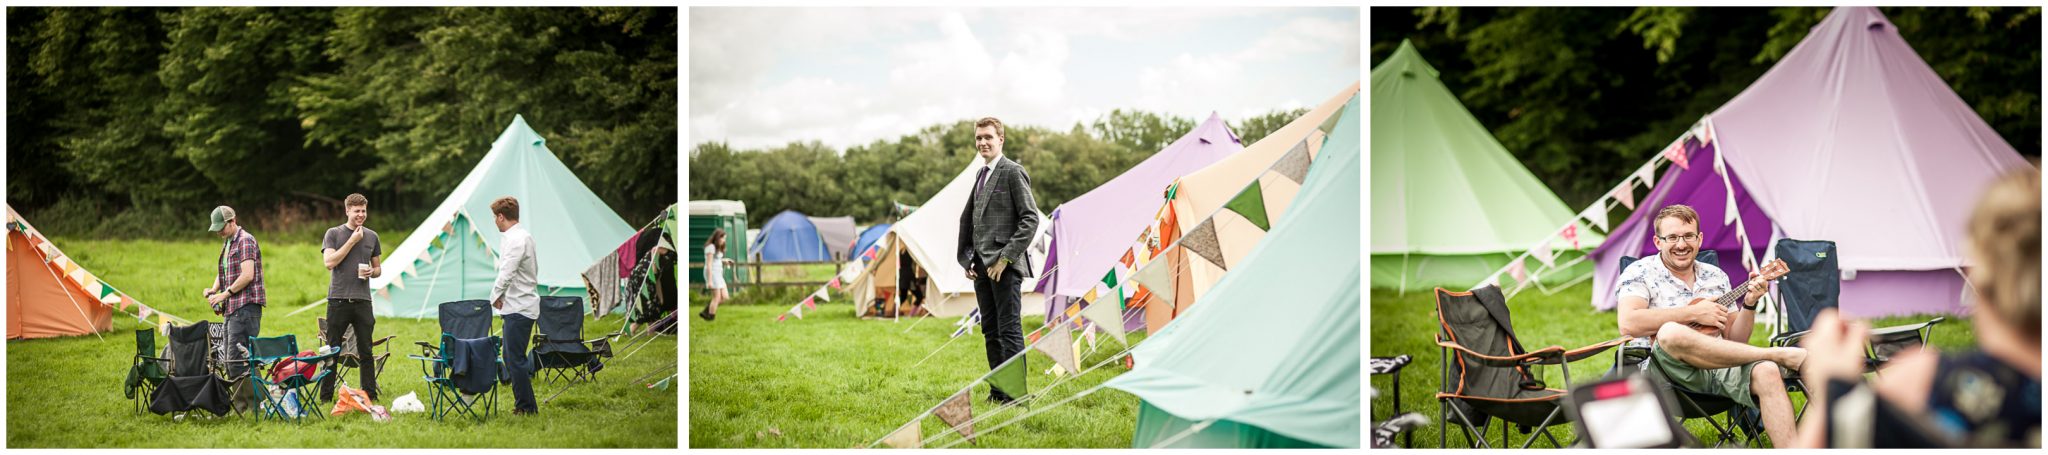 Timsbury Manor Festival Wedding groom and tents on wedding morning